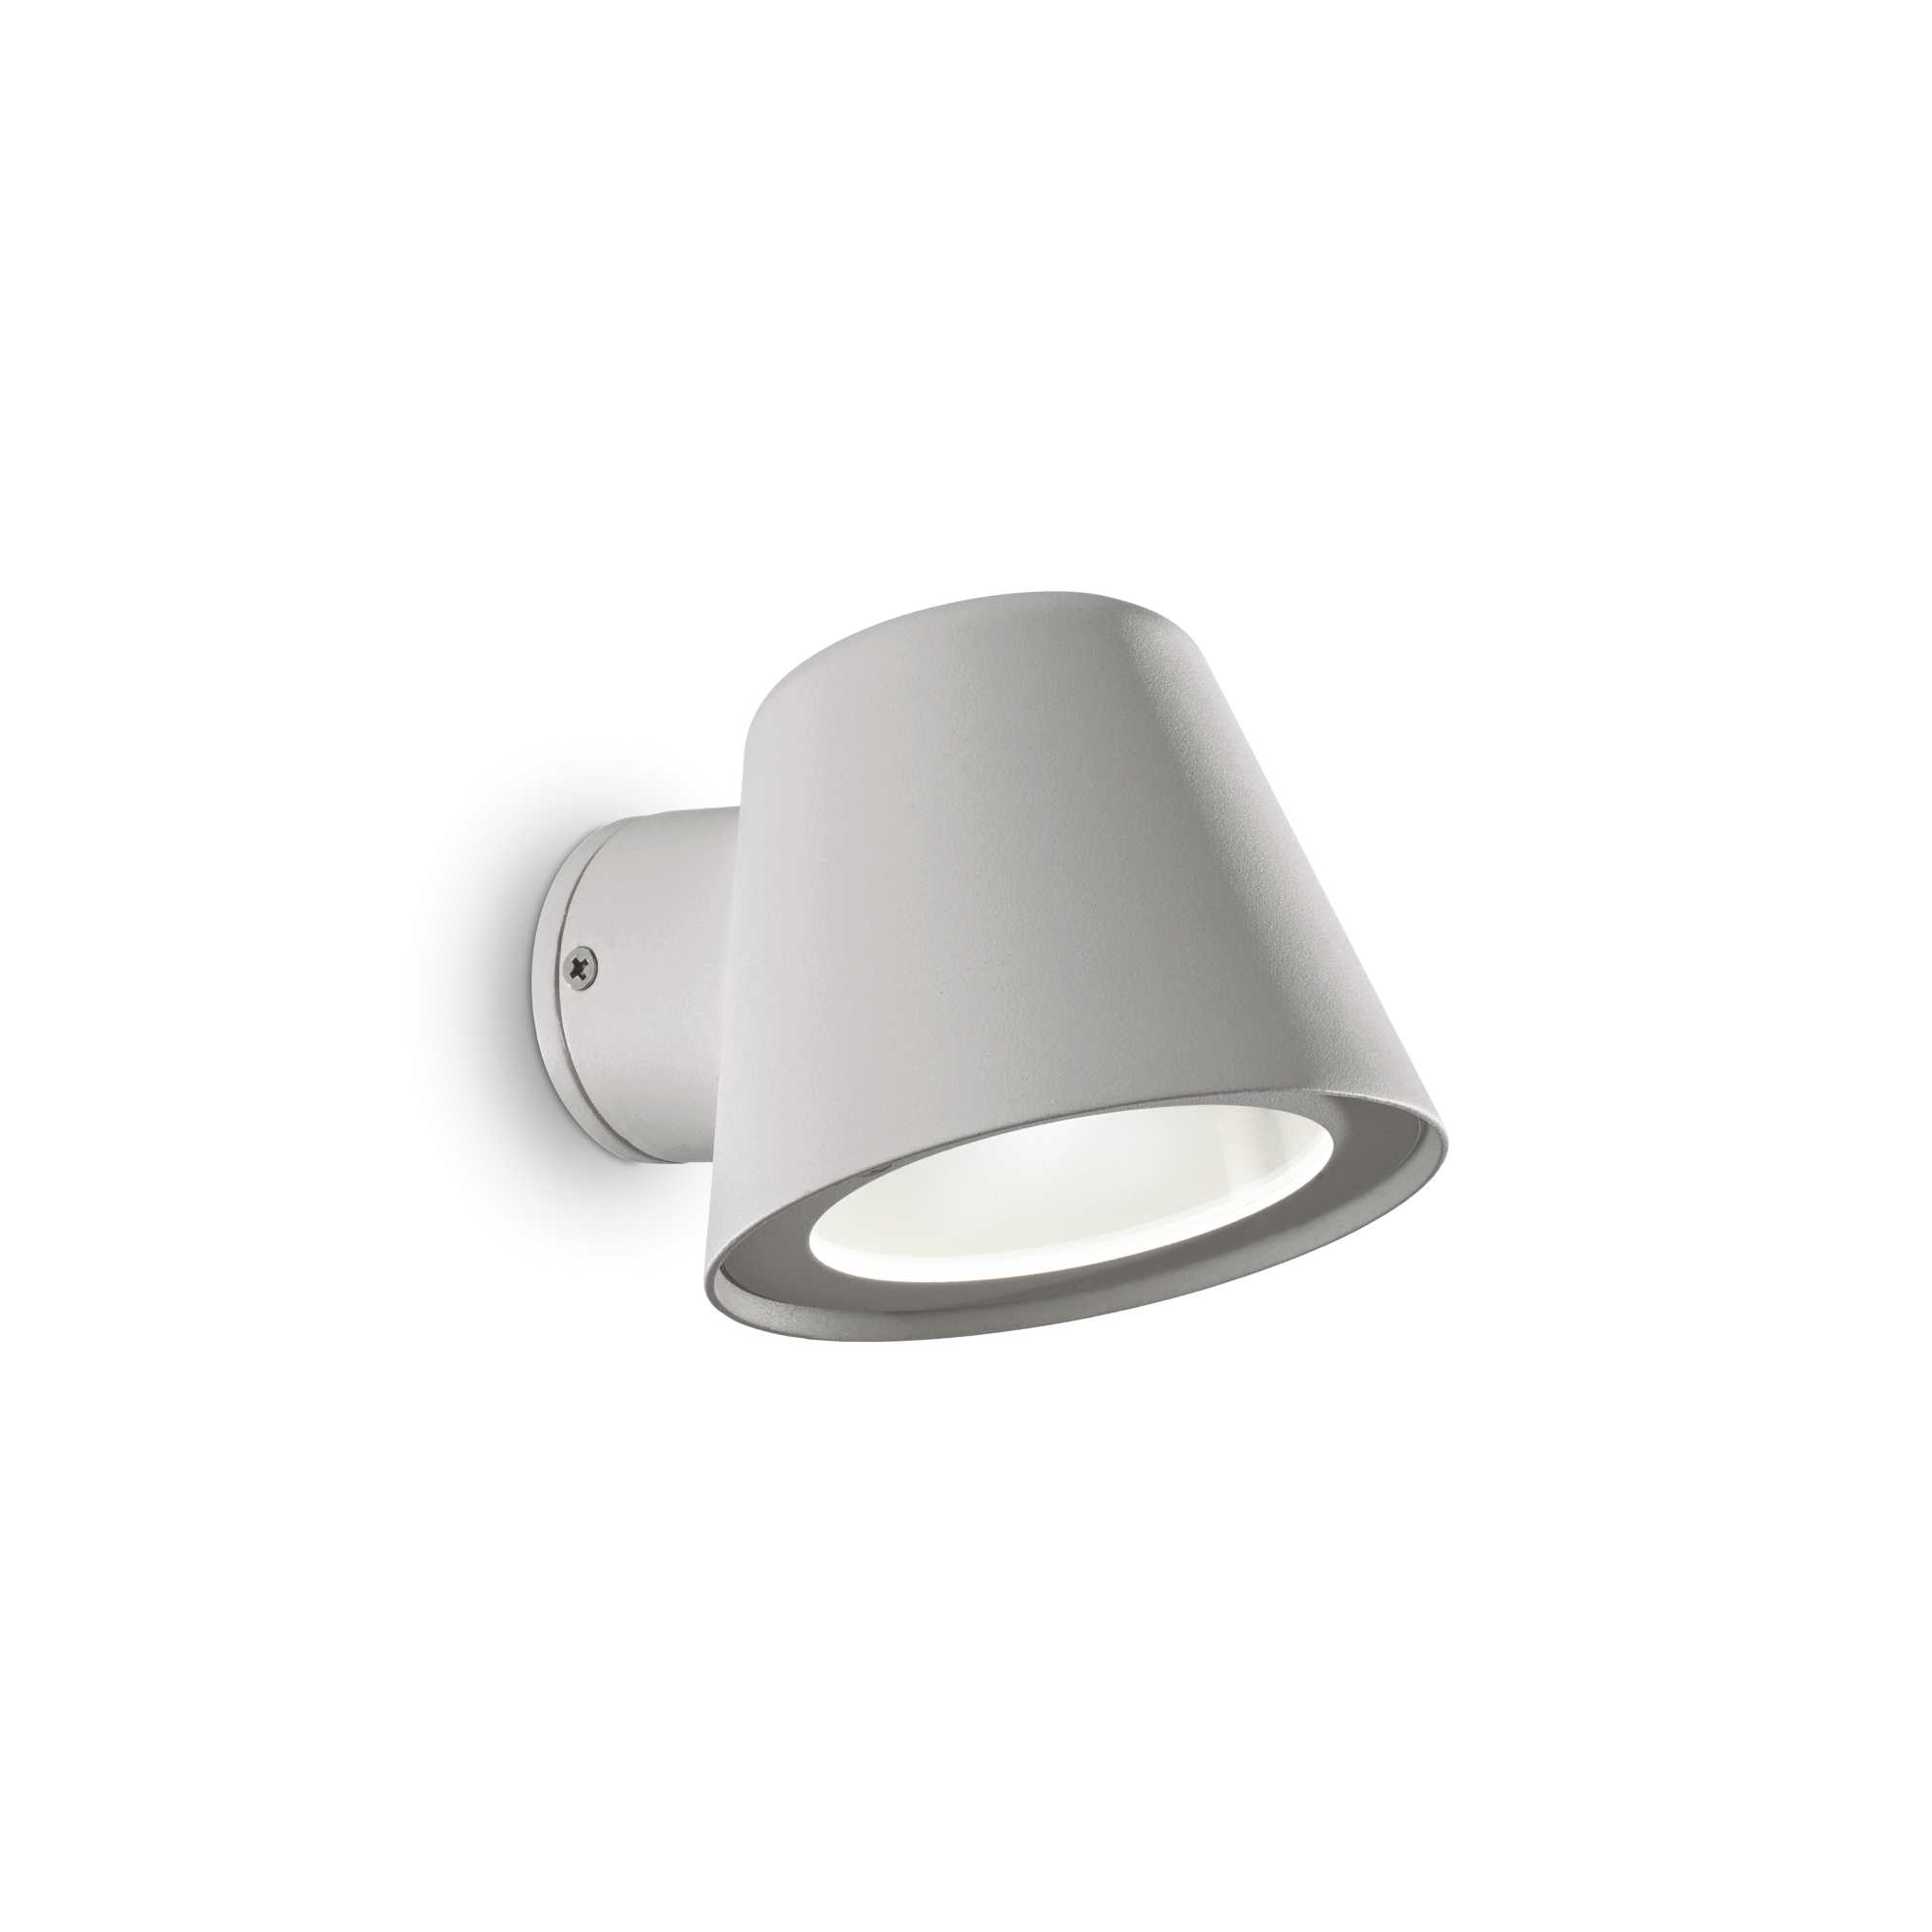 AD hotelska oprema Vanjska zidna lampa Gas ap1- Sive boje slika proizvoda